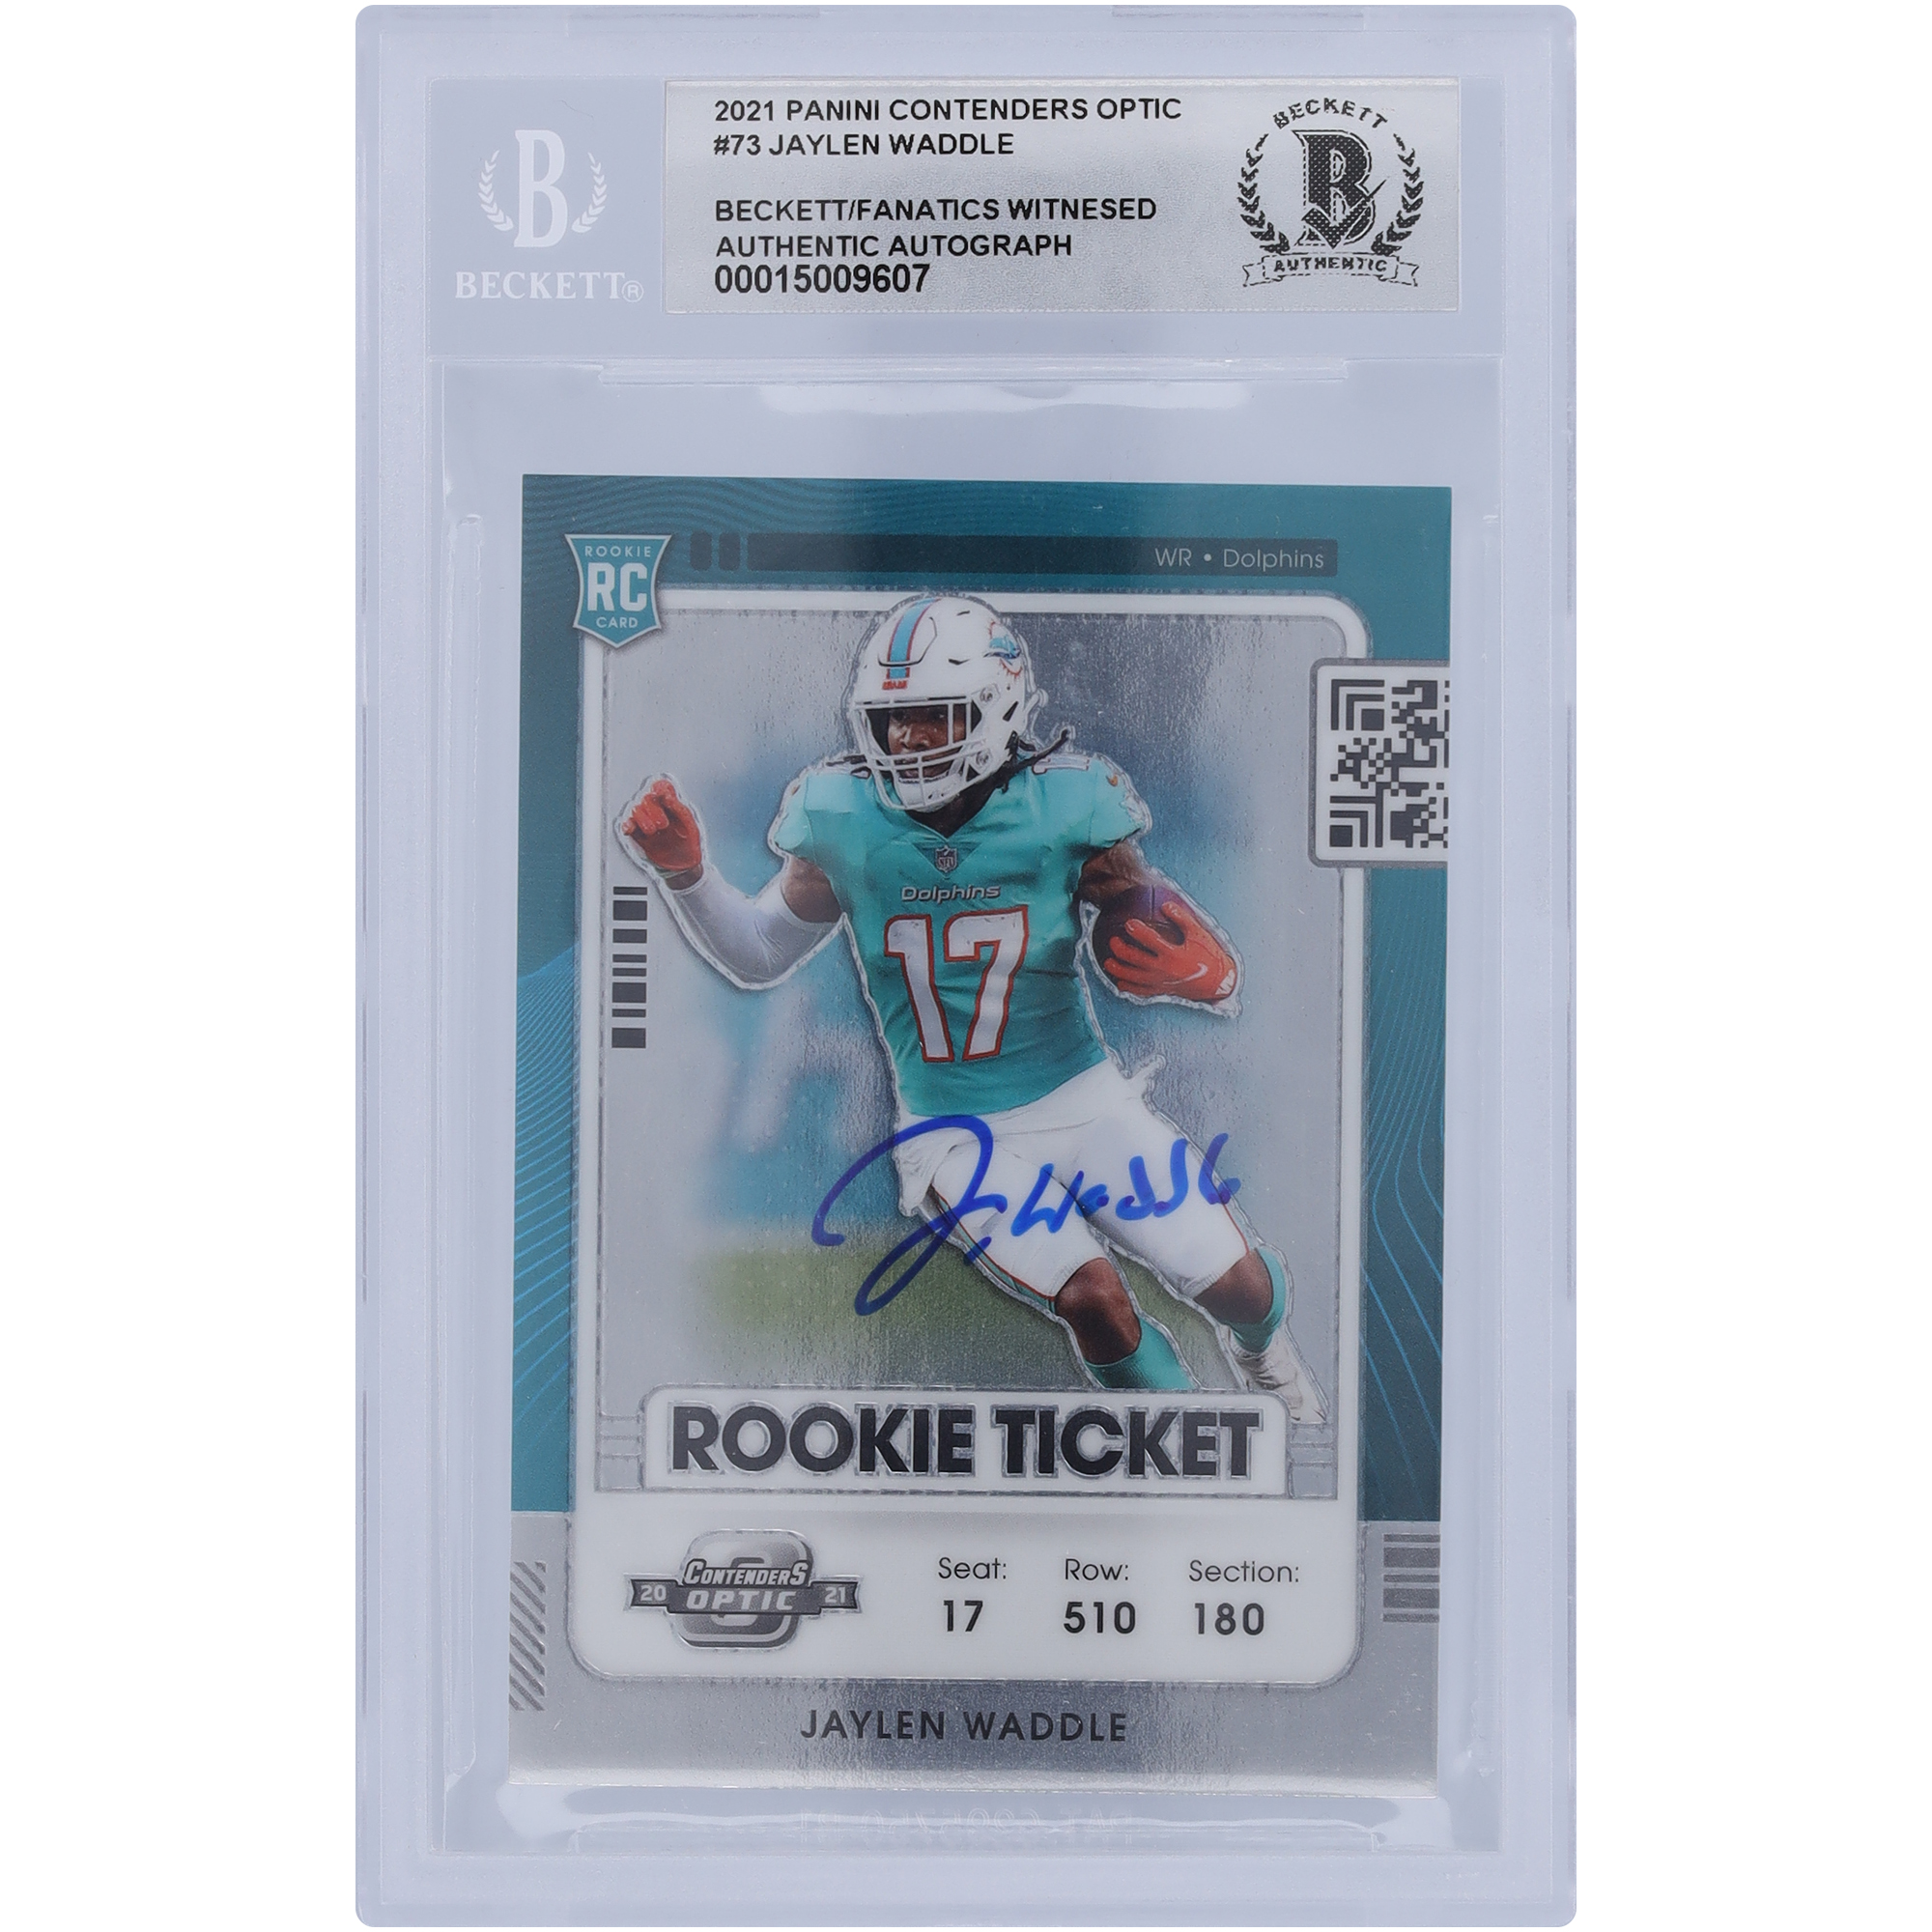 Jaylen Waddle Miami Dolphins signiertes 2021 Panini Contenders Optic Rookie Ticket #73 Beckett Fanatics bezeugte authentifizierte 10 Rookie-Karte